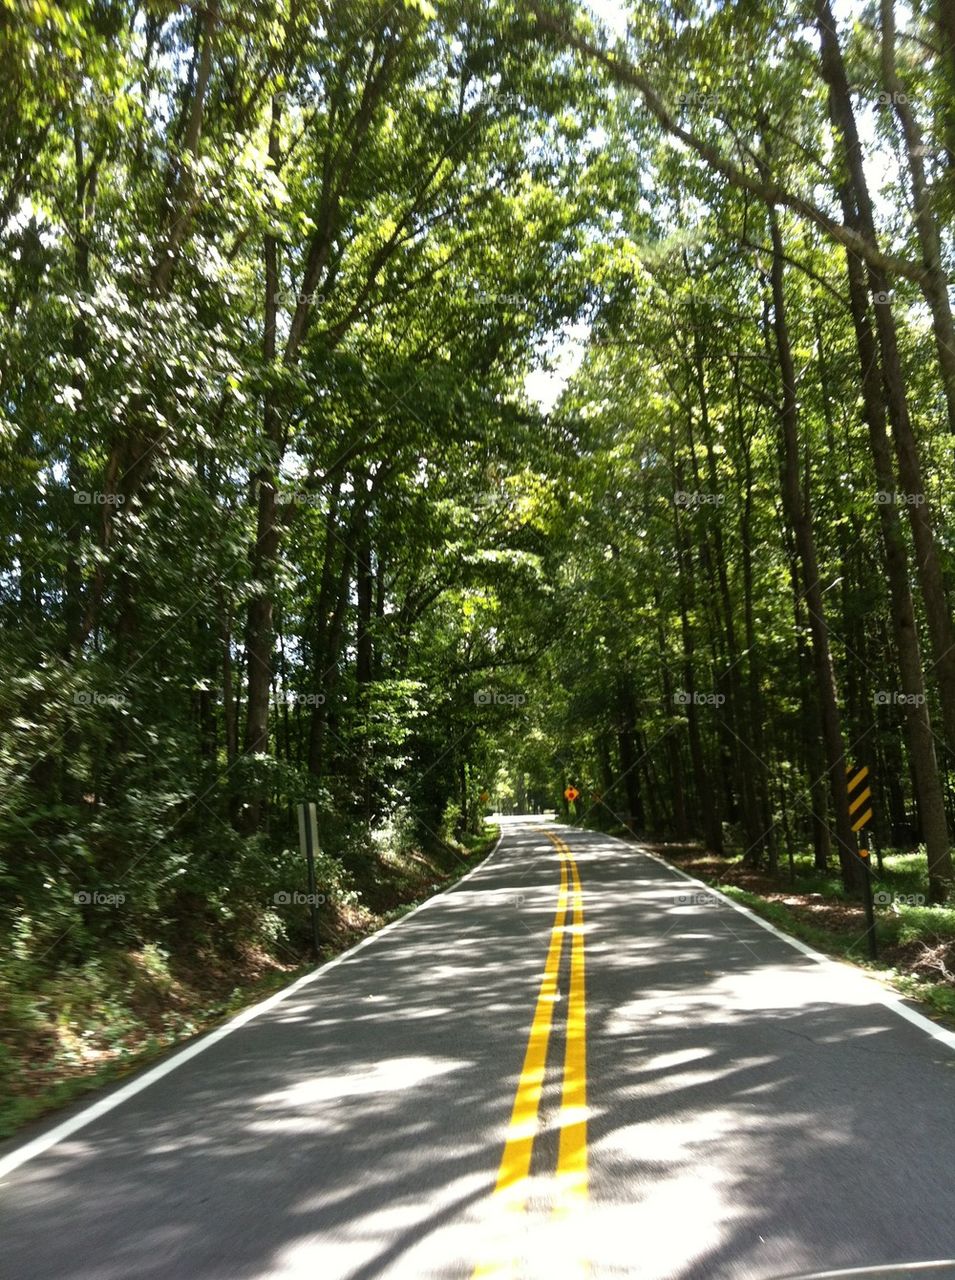 Georgia road